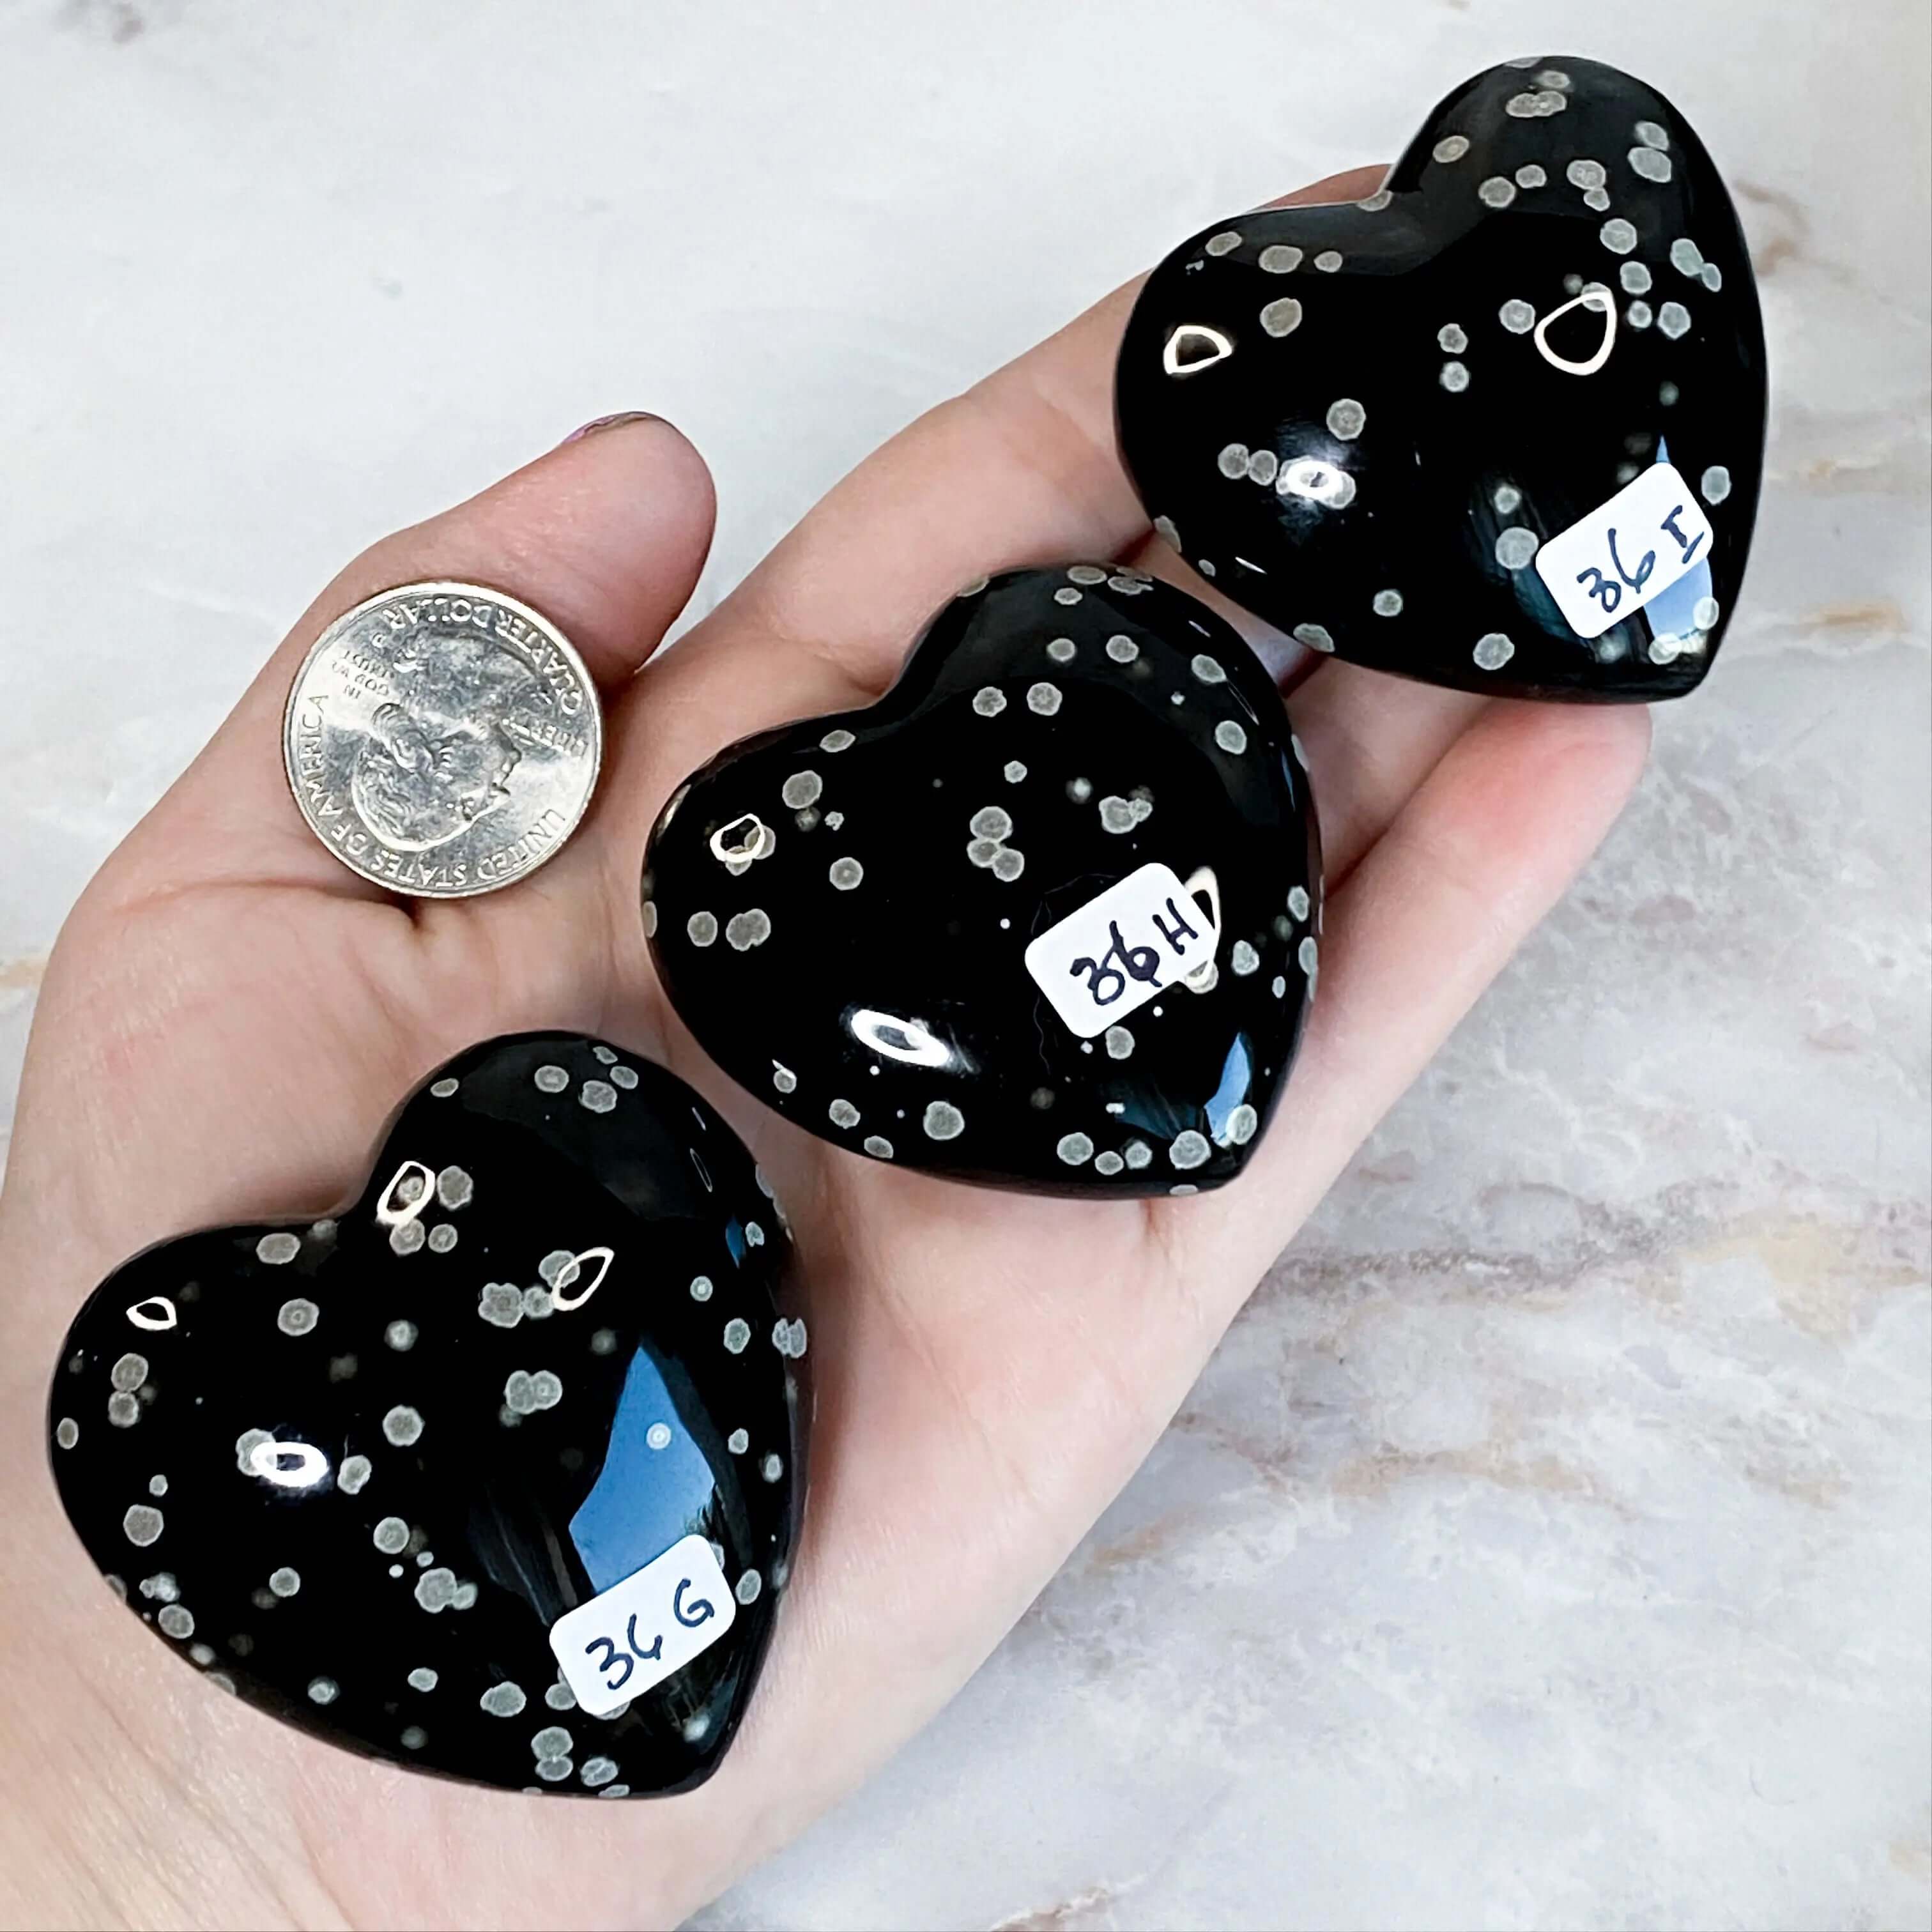 Snowflake Obsidian Heart | You Choose GHI Mooncat Crystals